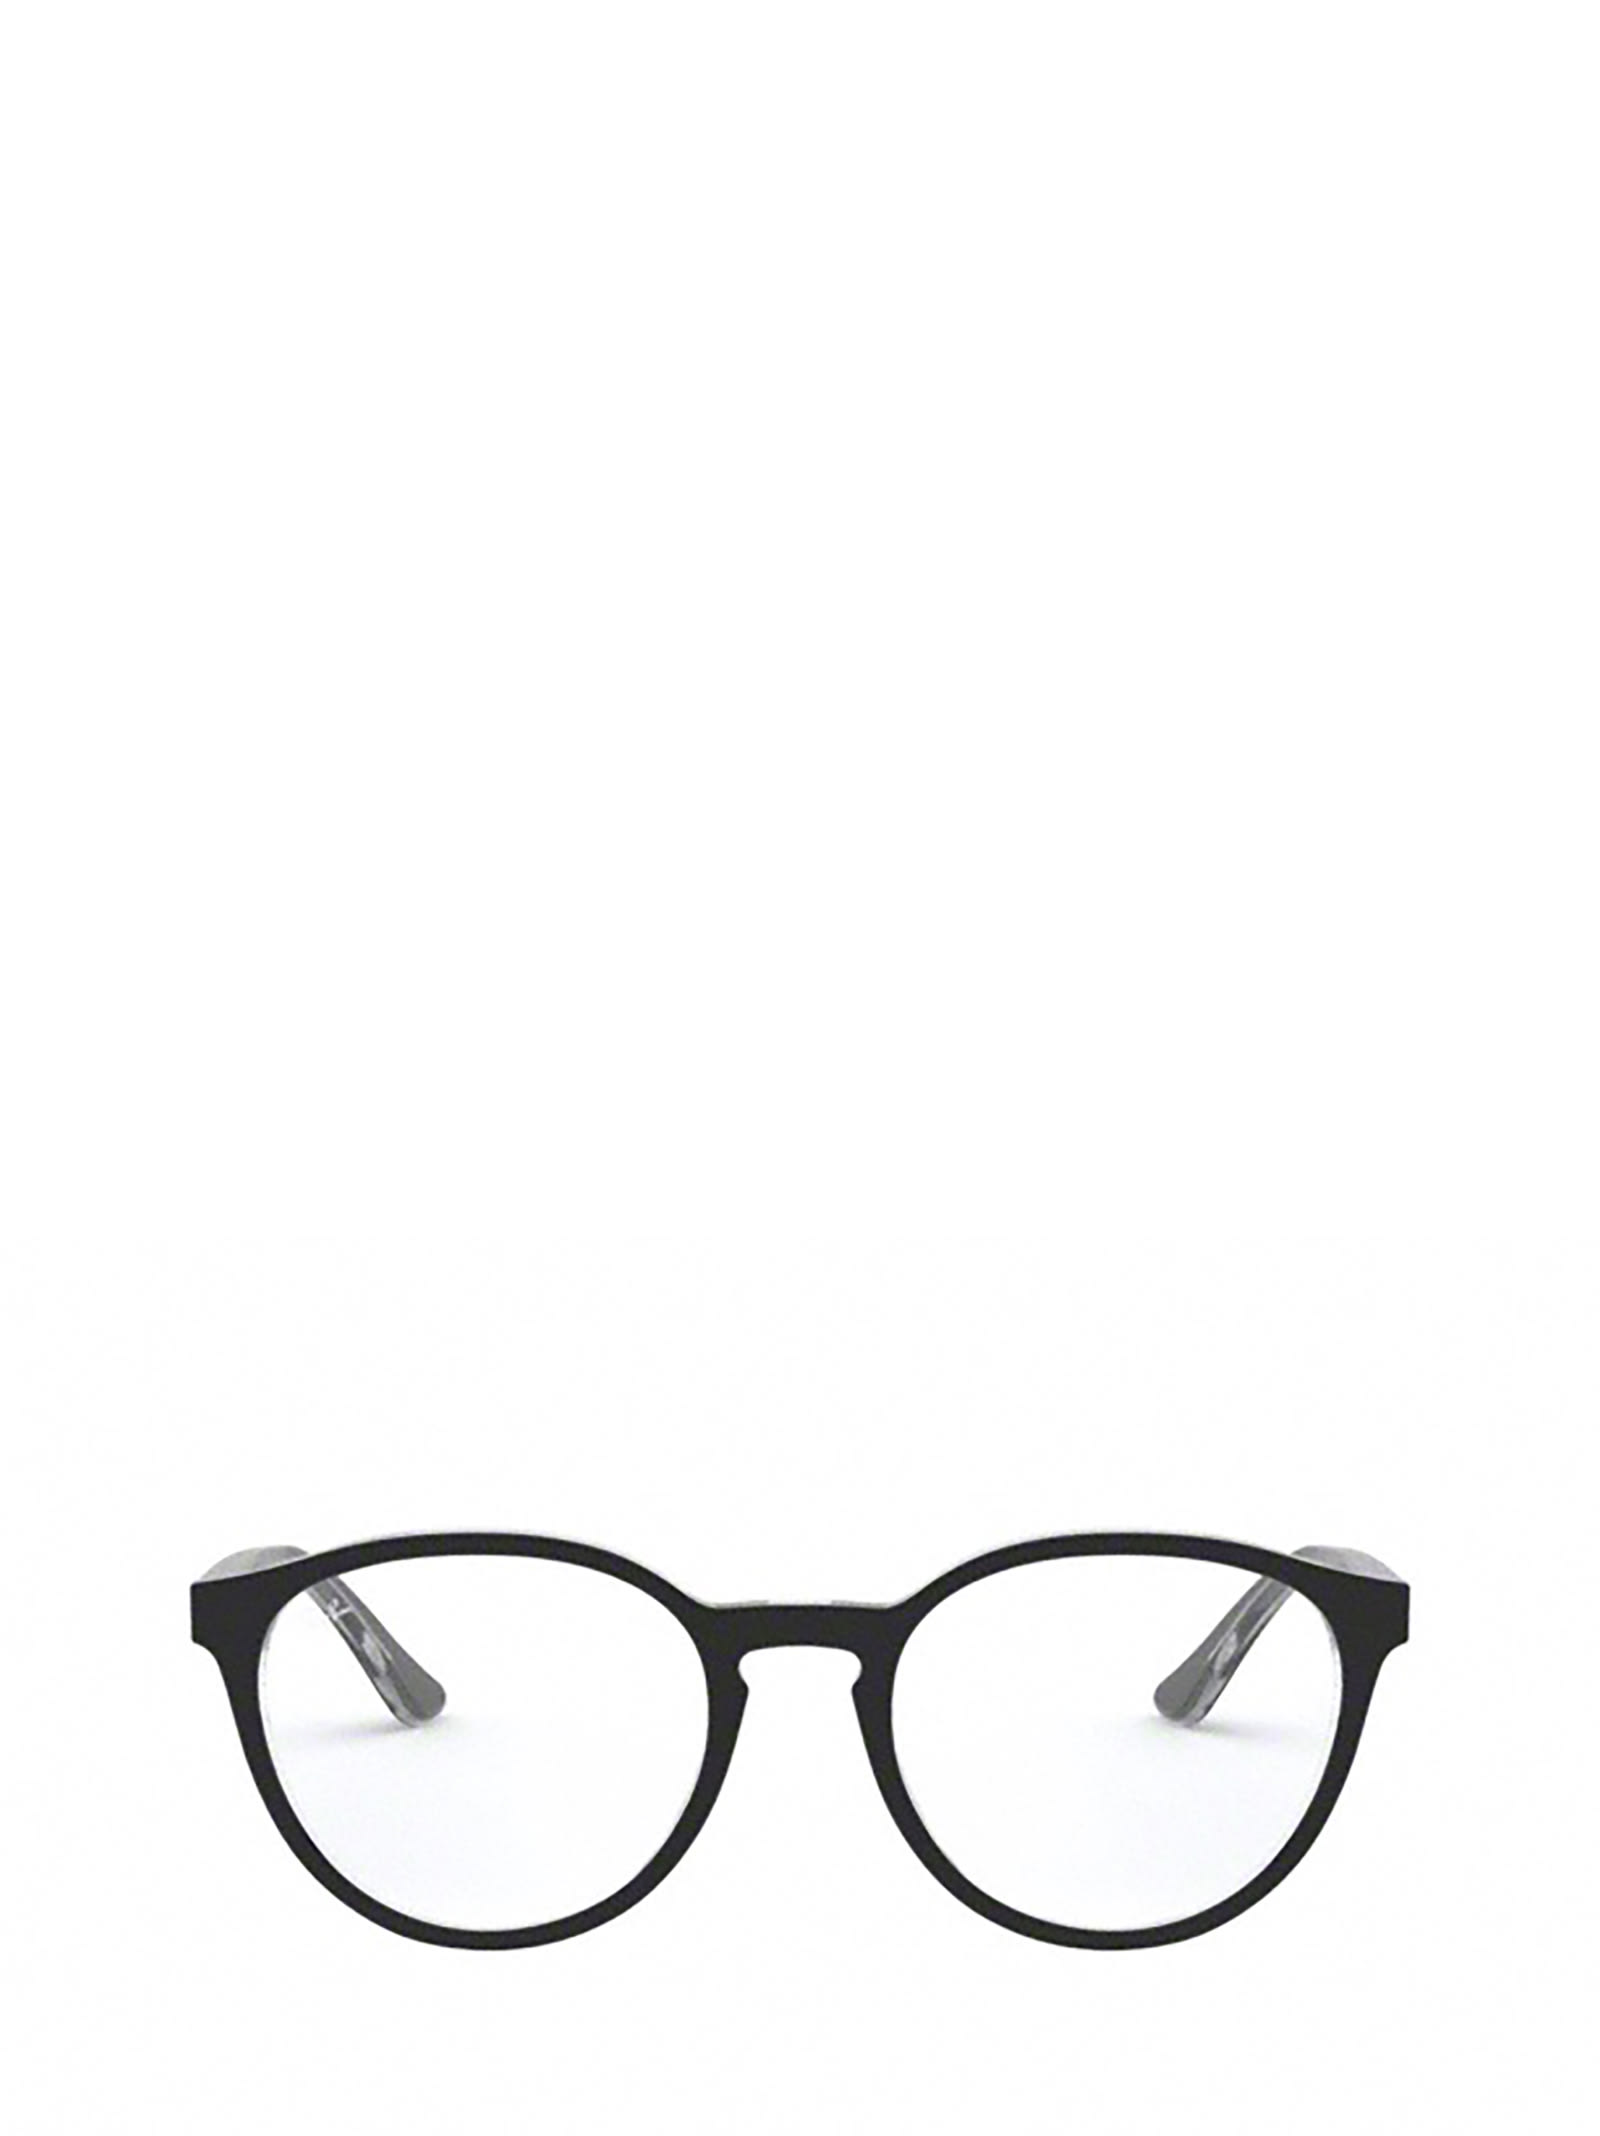 Ray Ban Ray-ban Rx5380 Black On Transparent Glasses